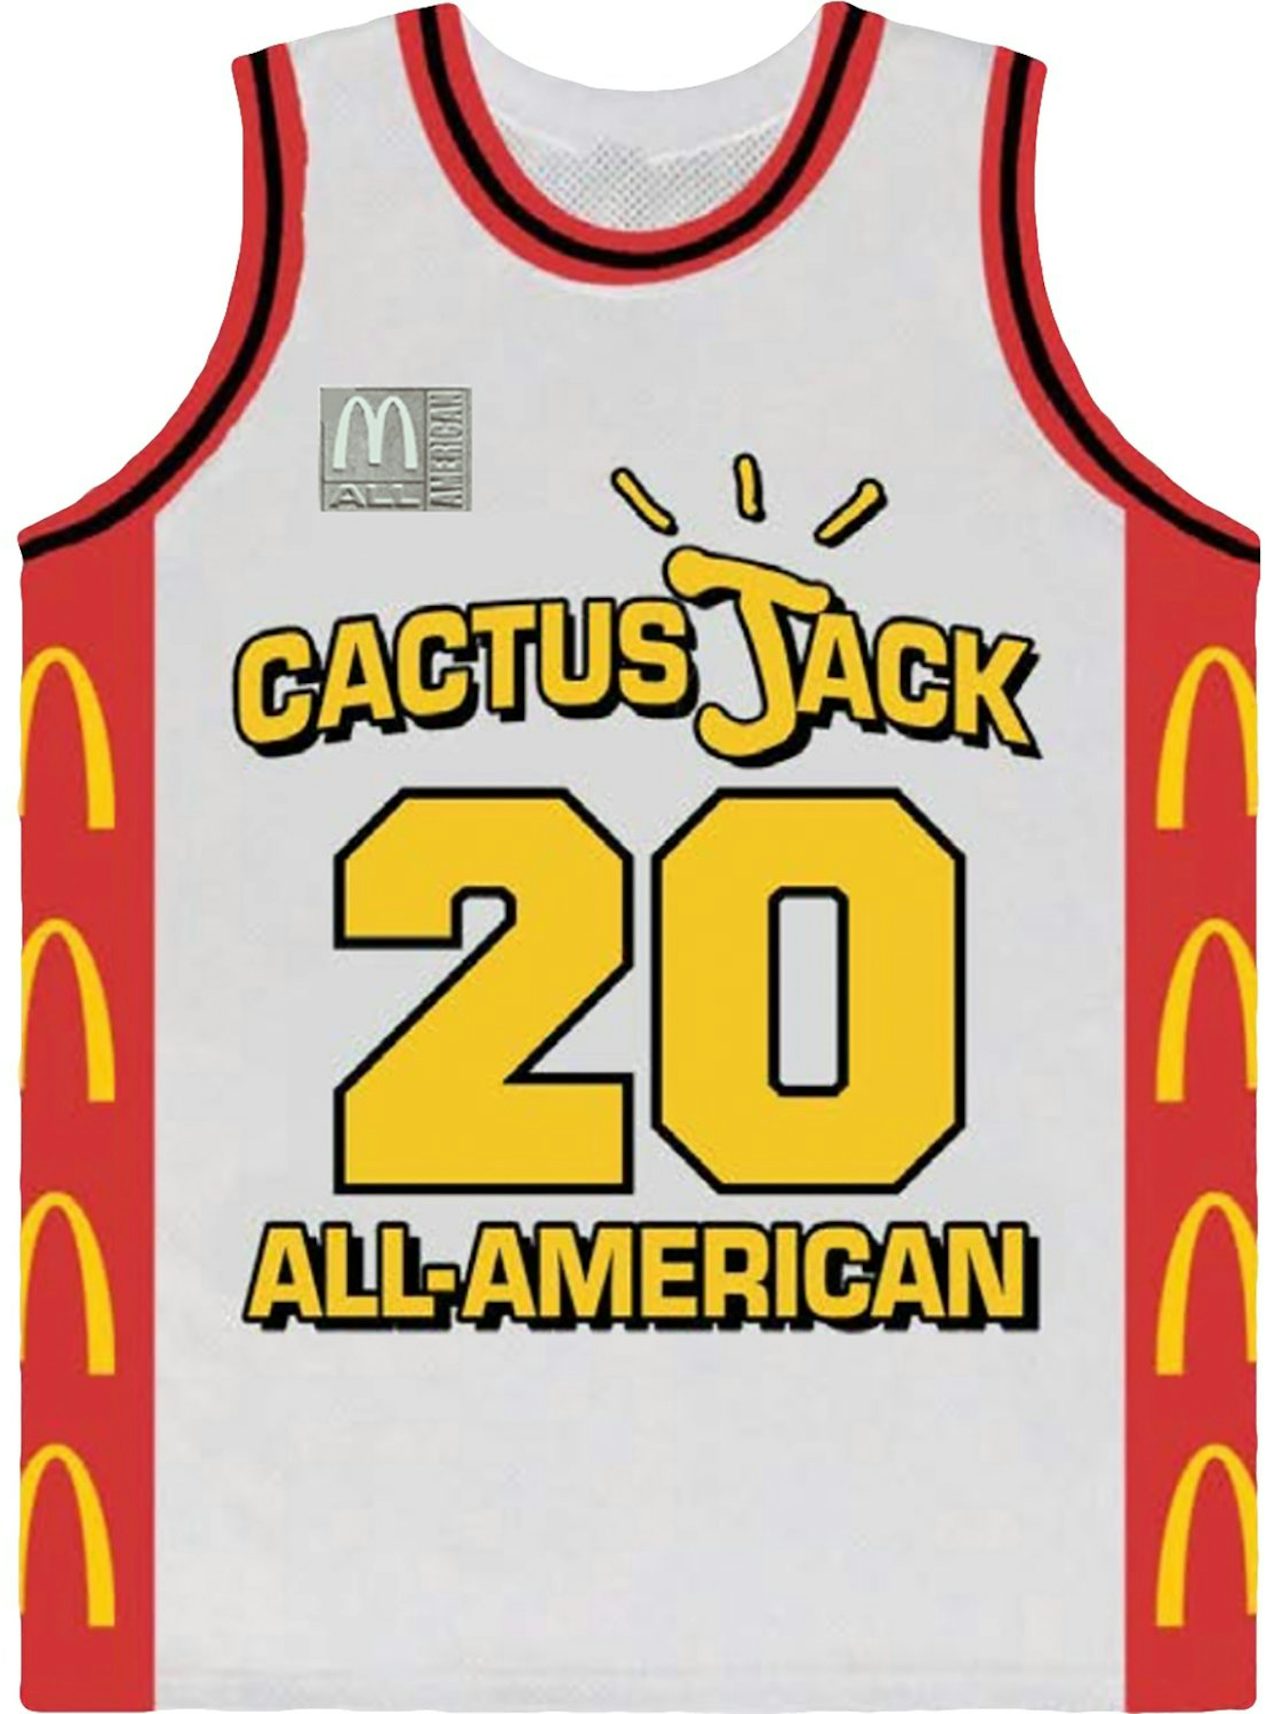 Adidas McDonald’s All American Basketball Jersey - Size Small Women’s